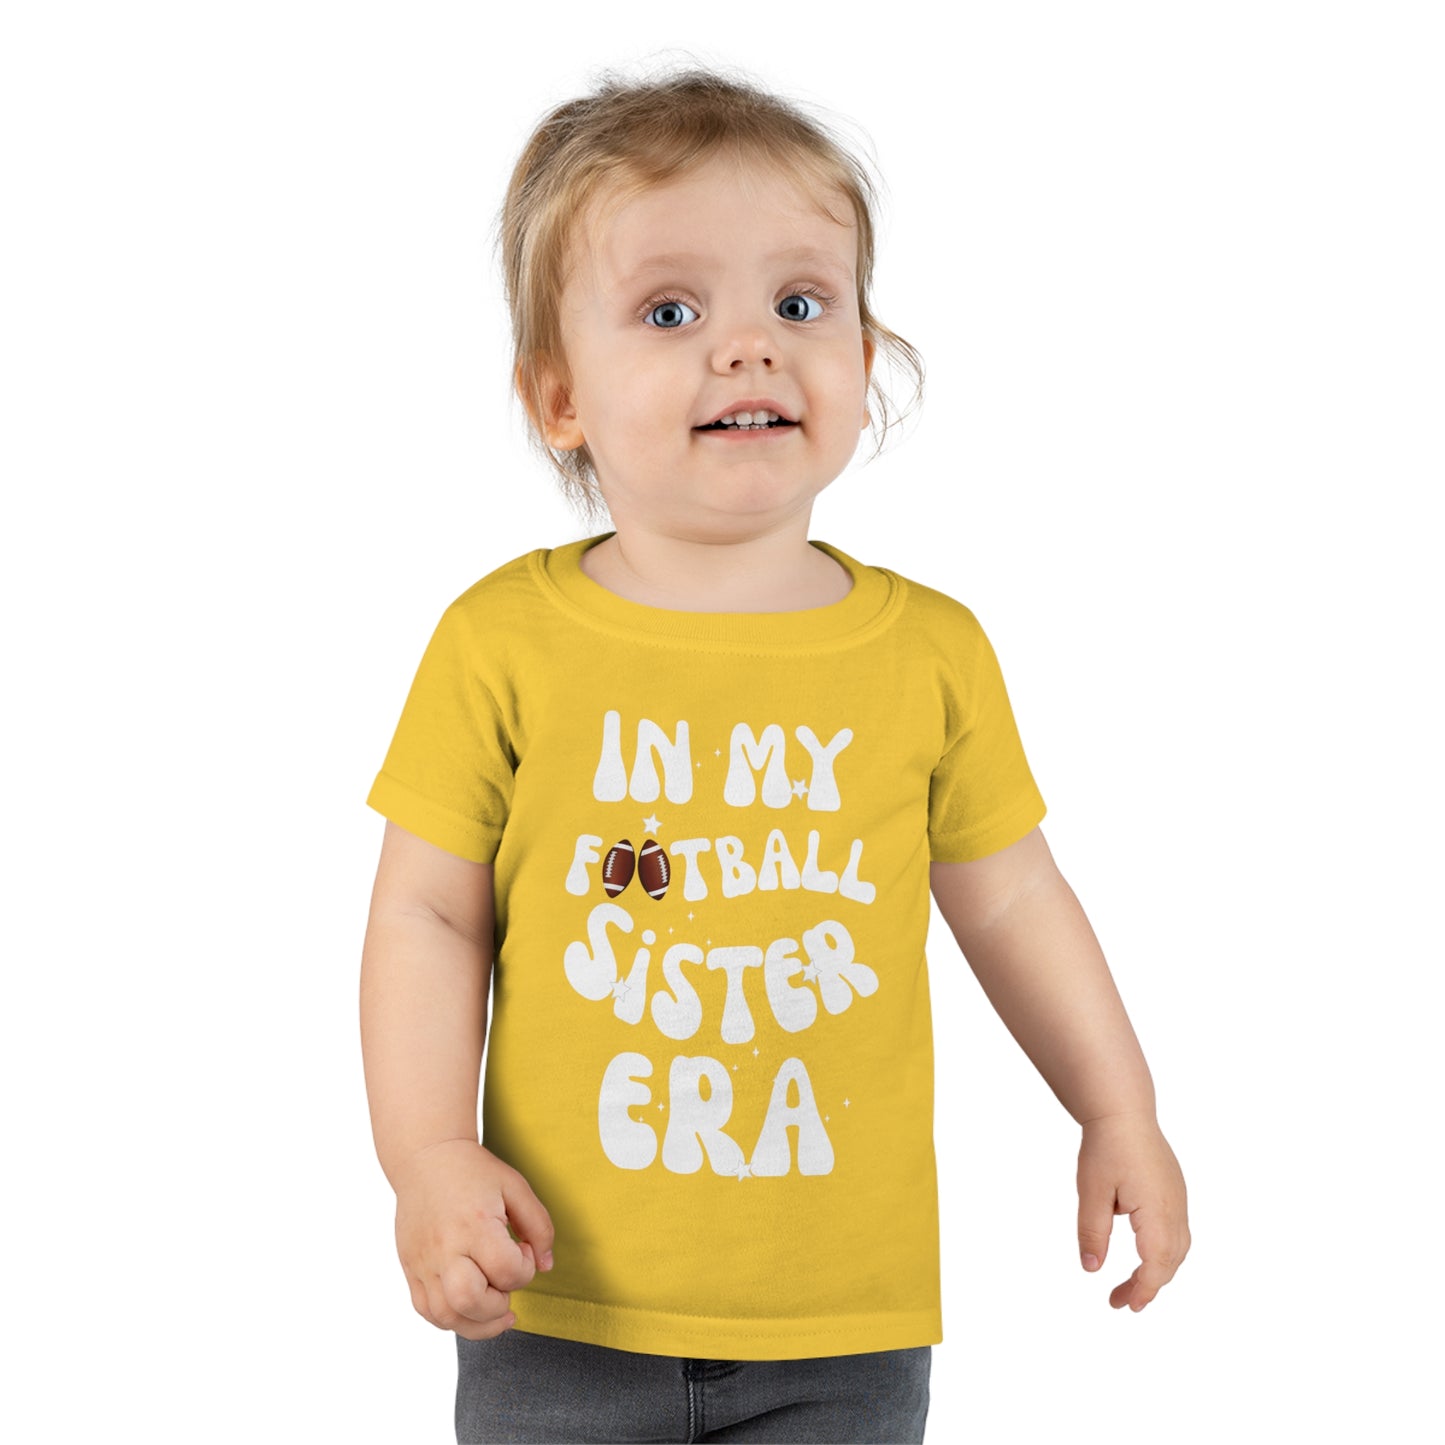 In My Football Sister Era - Toddler T-shirt